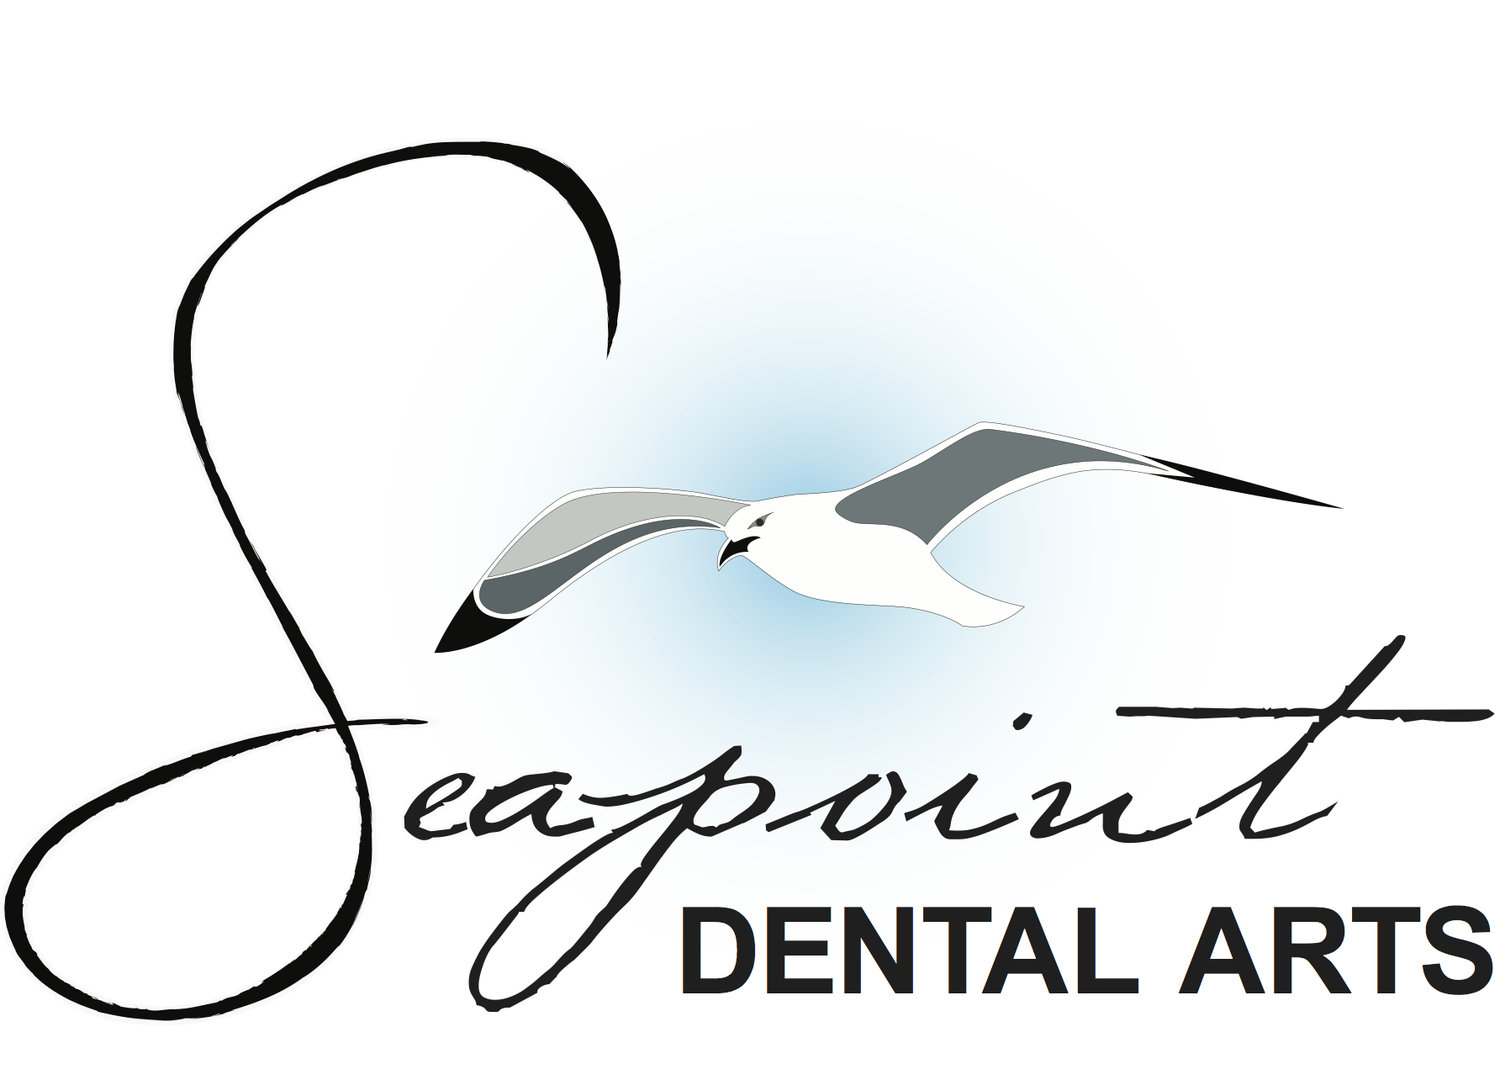 Seapoint Dental Arts